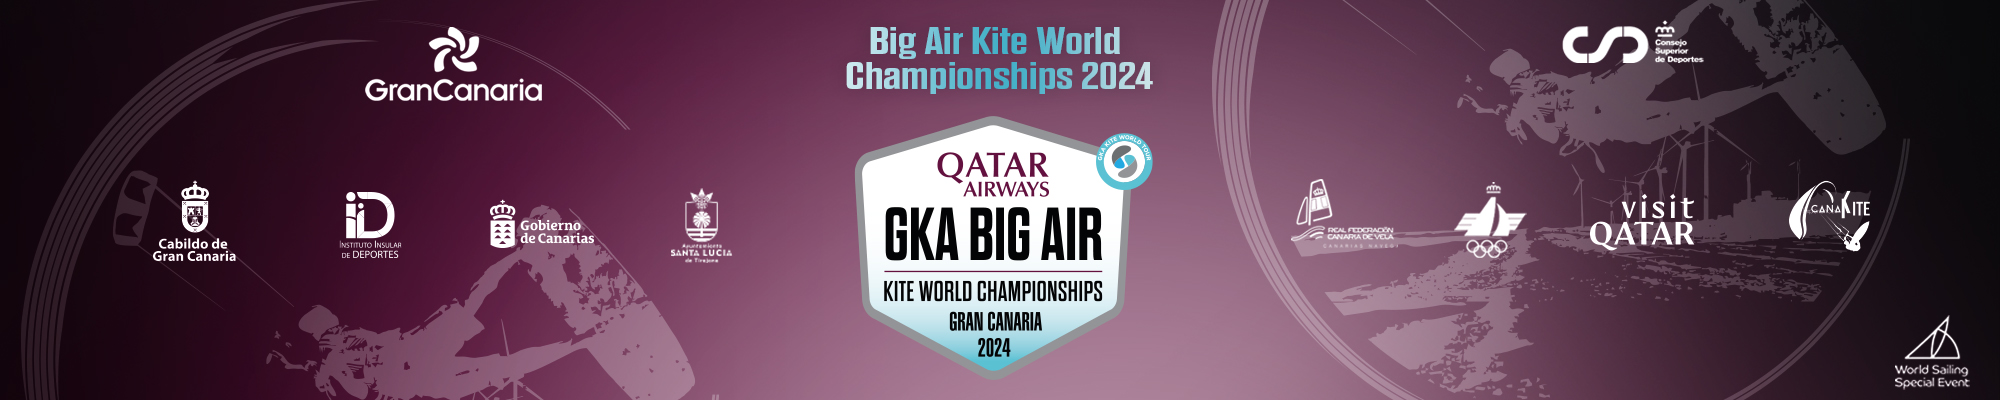 Image for Qatar Airways GKA Big Air Kite World Championships 2024